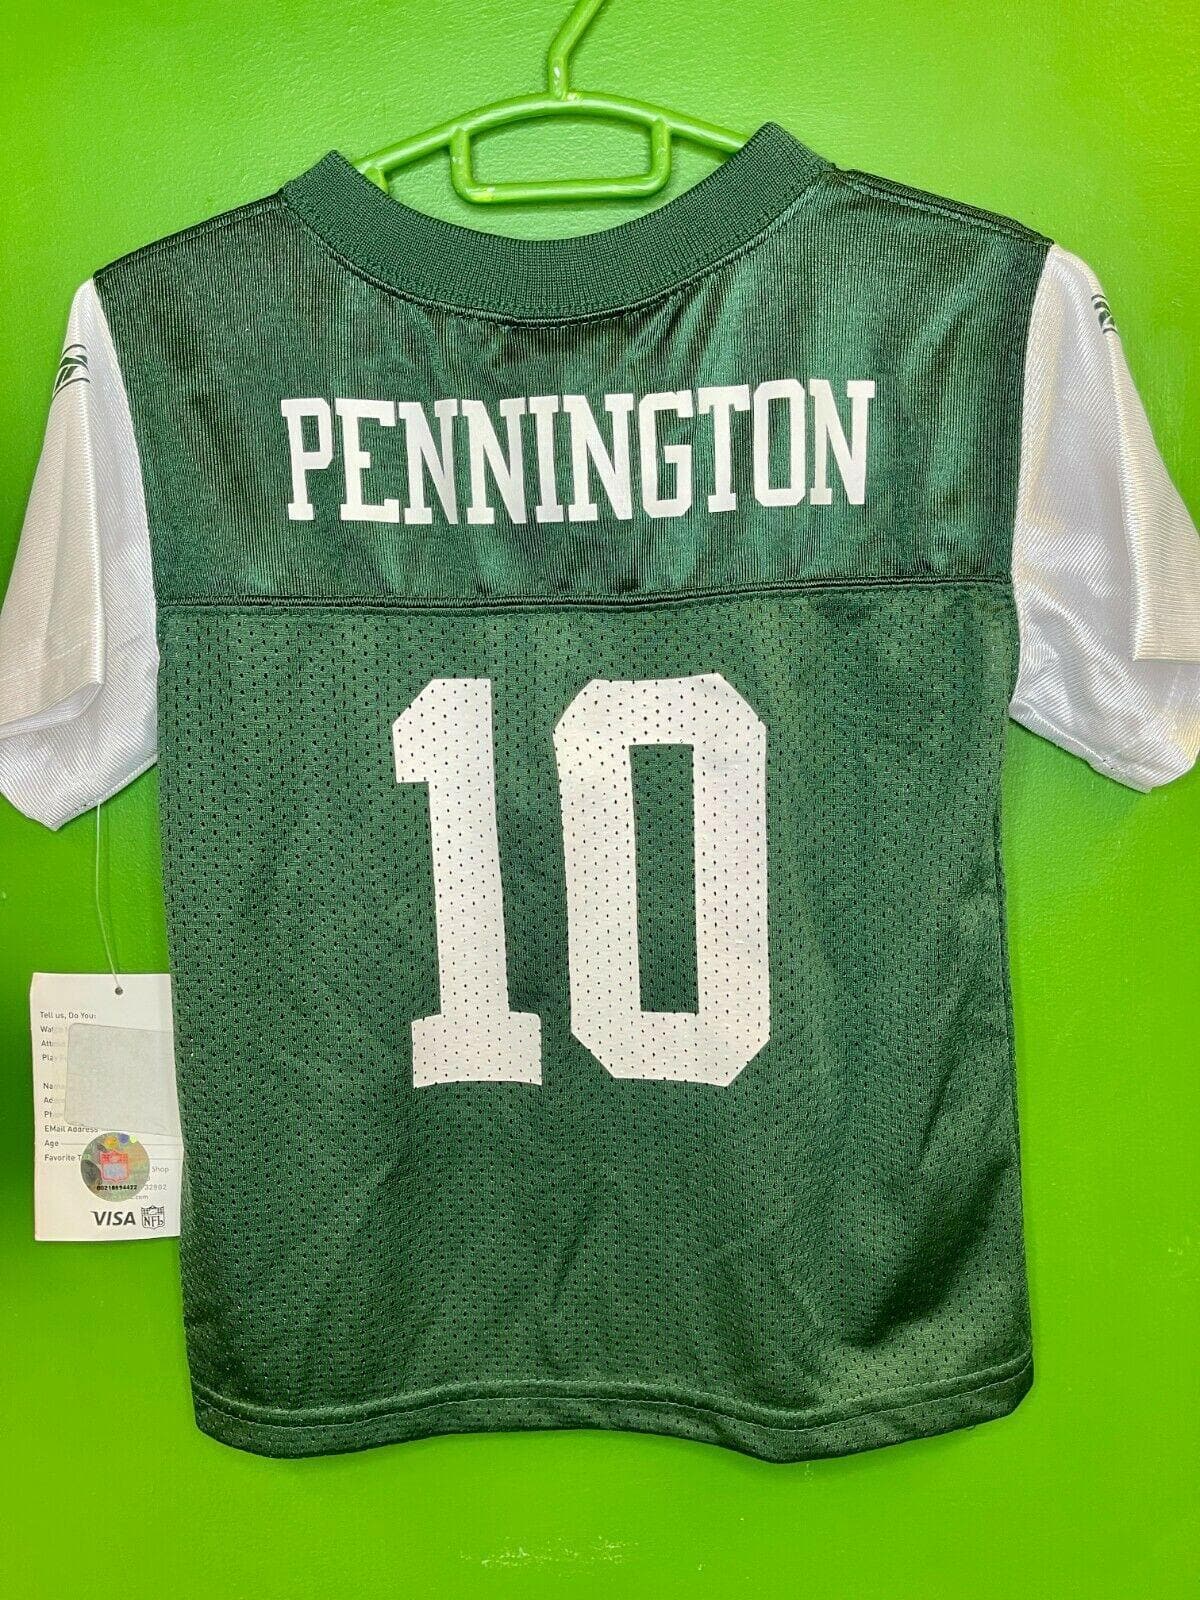 NFL New York Jets Chad Pennington #10 Reebok Jersey Youth X-S 4T NWT